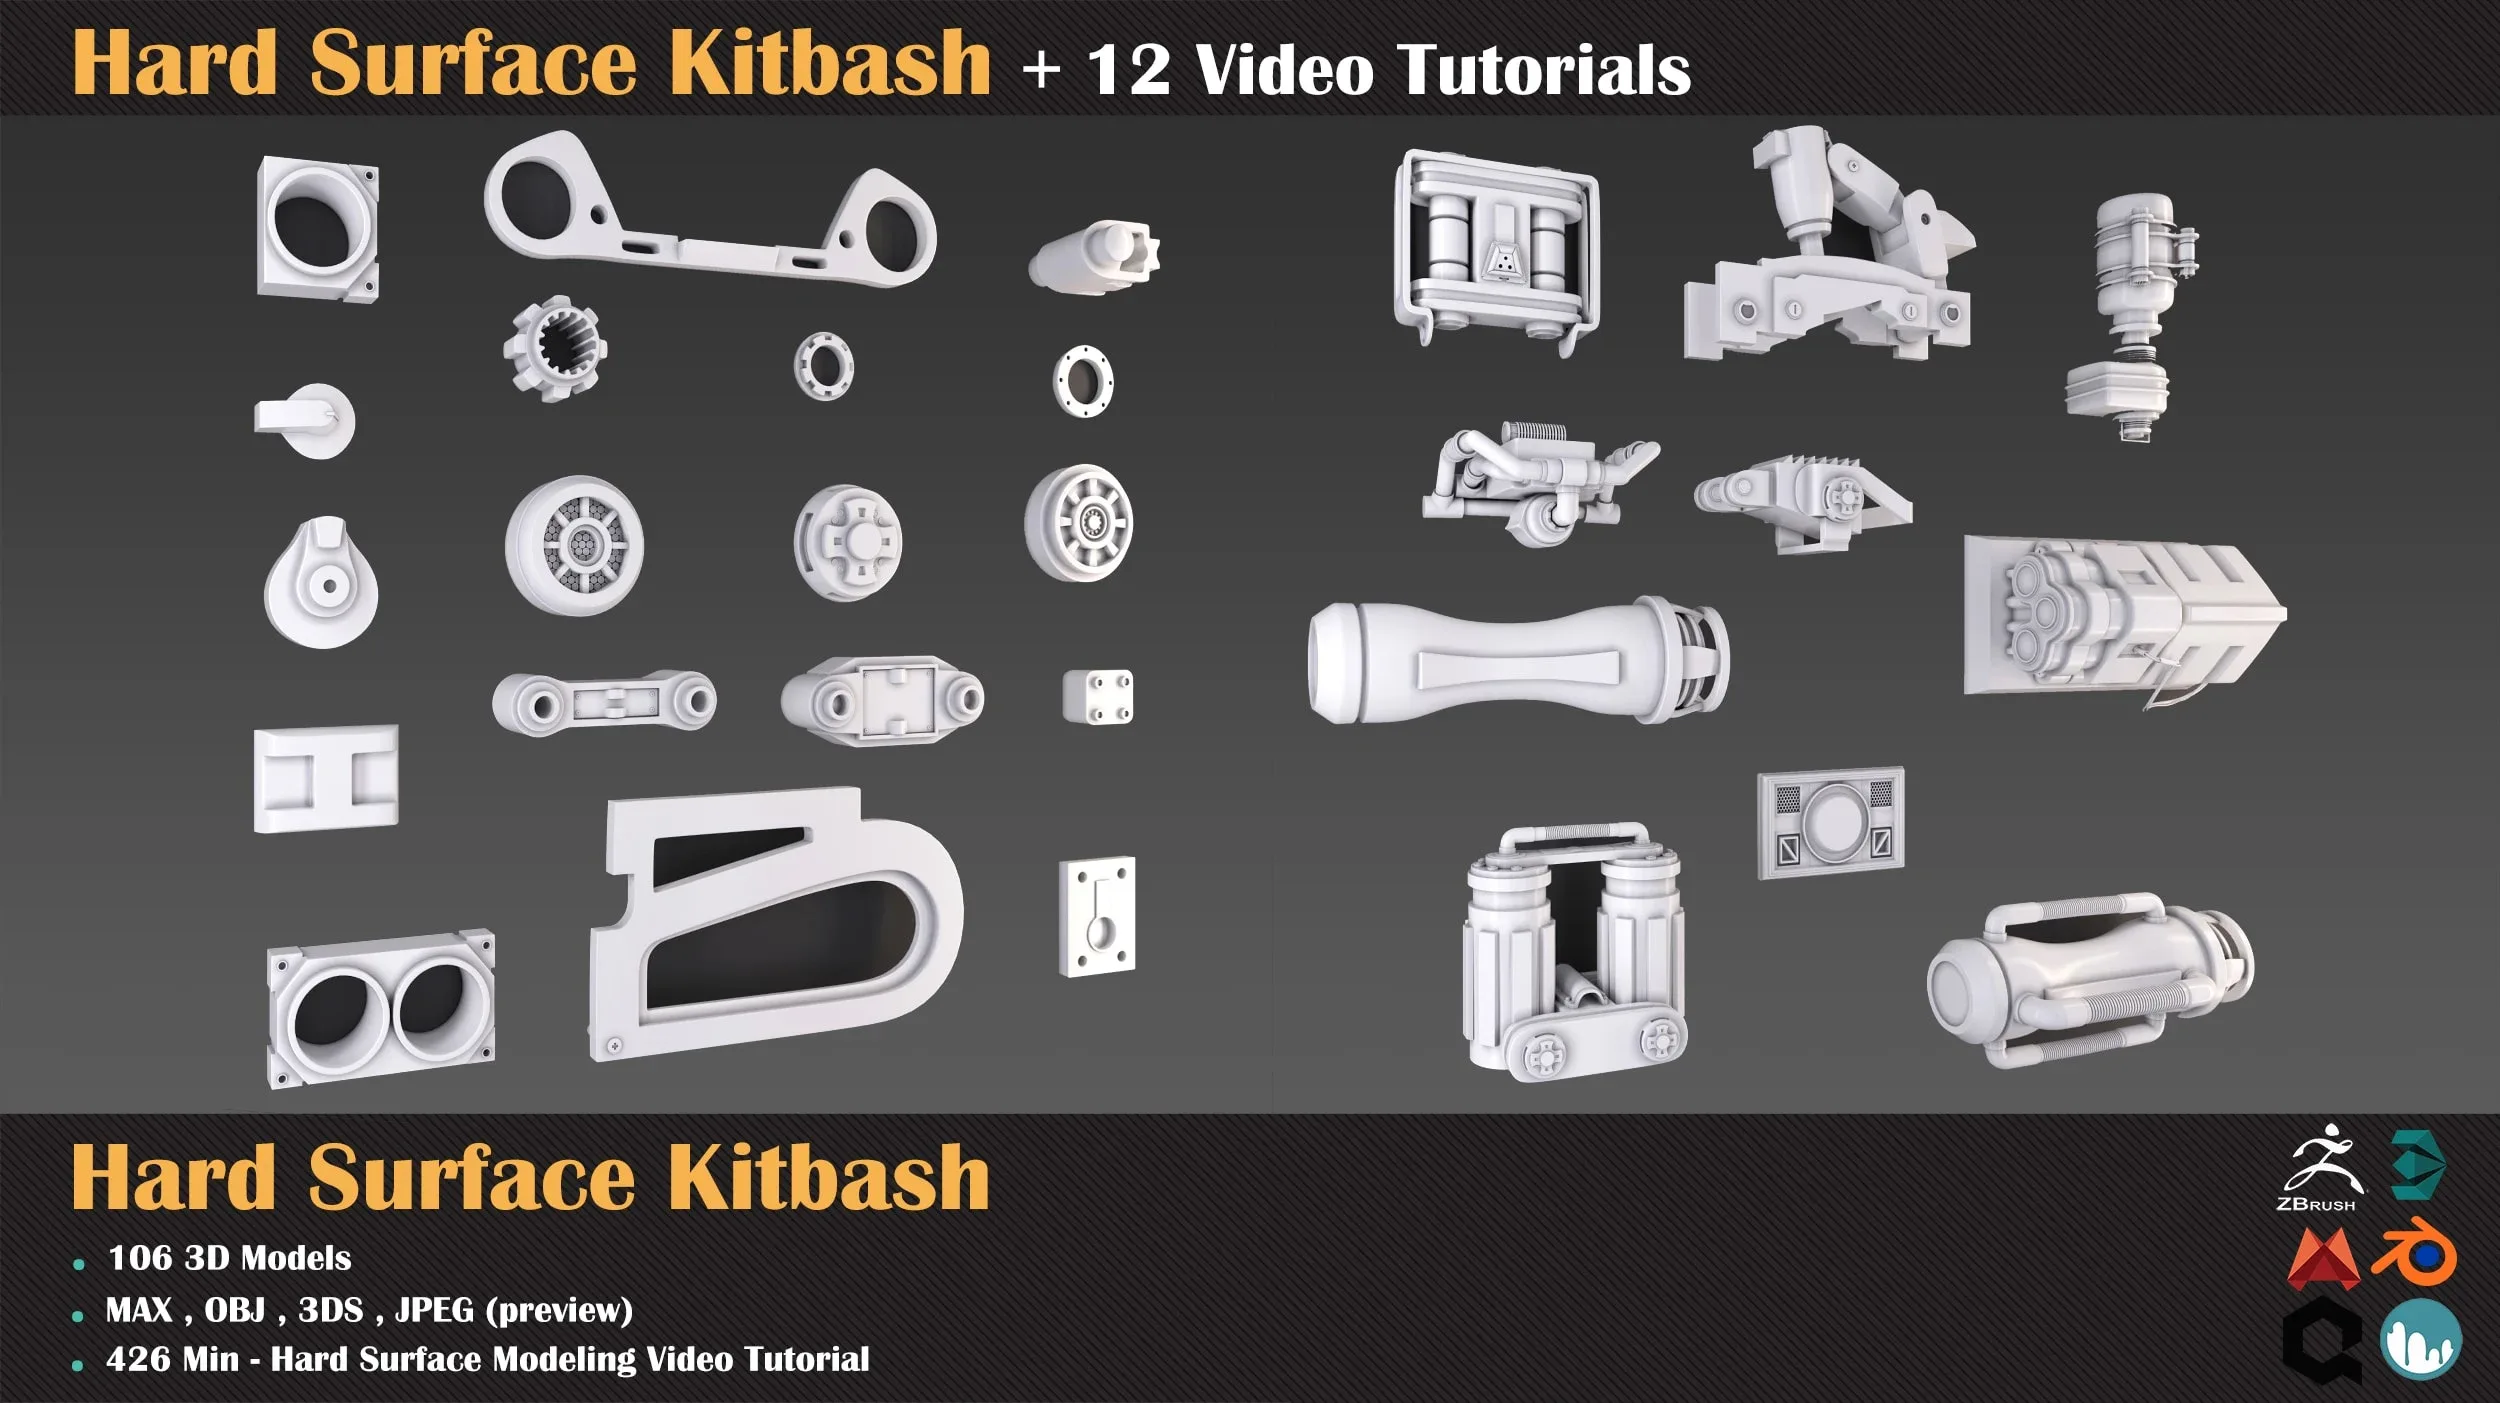 Hard Surface Kitbash + 12 Video Tutorials